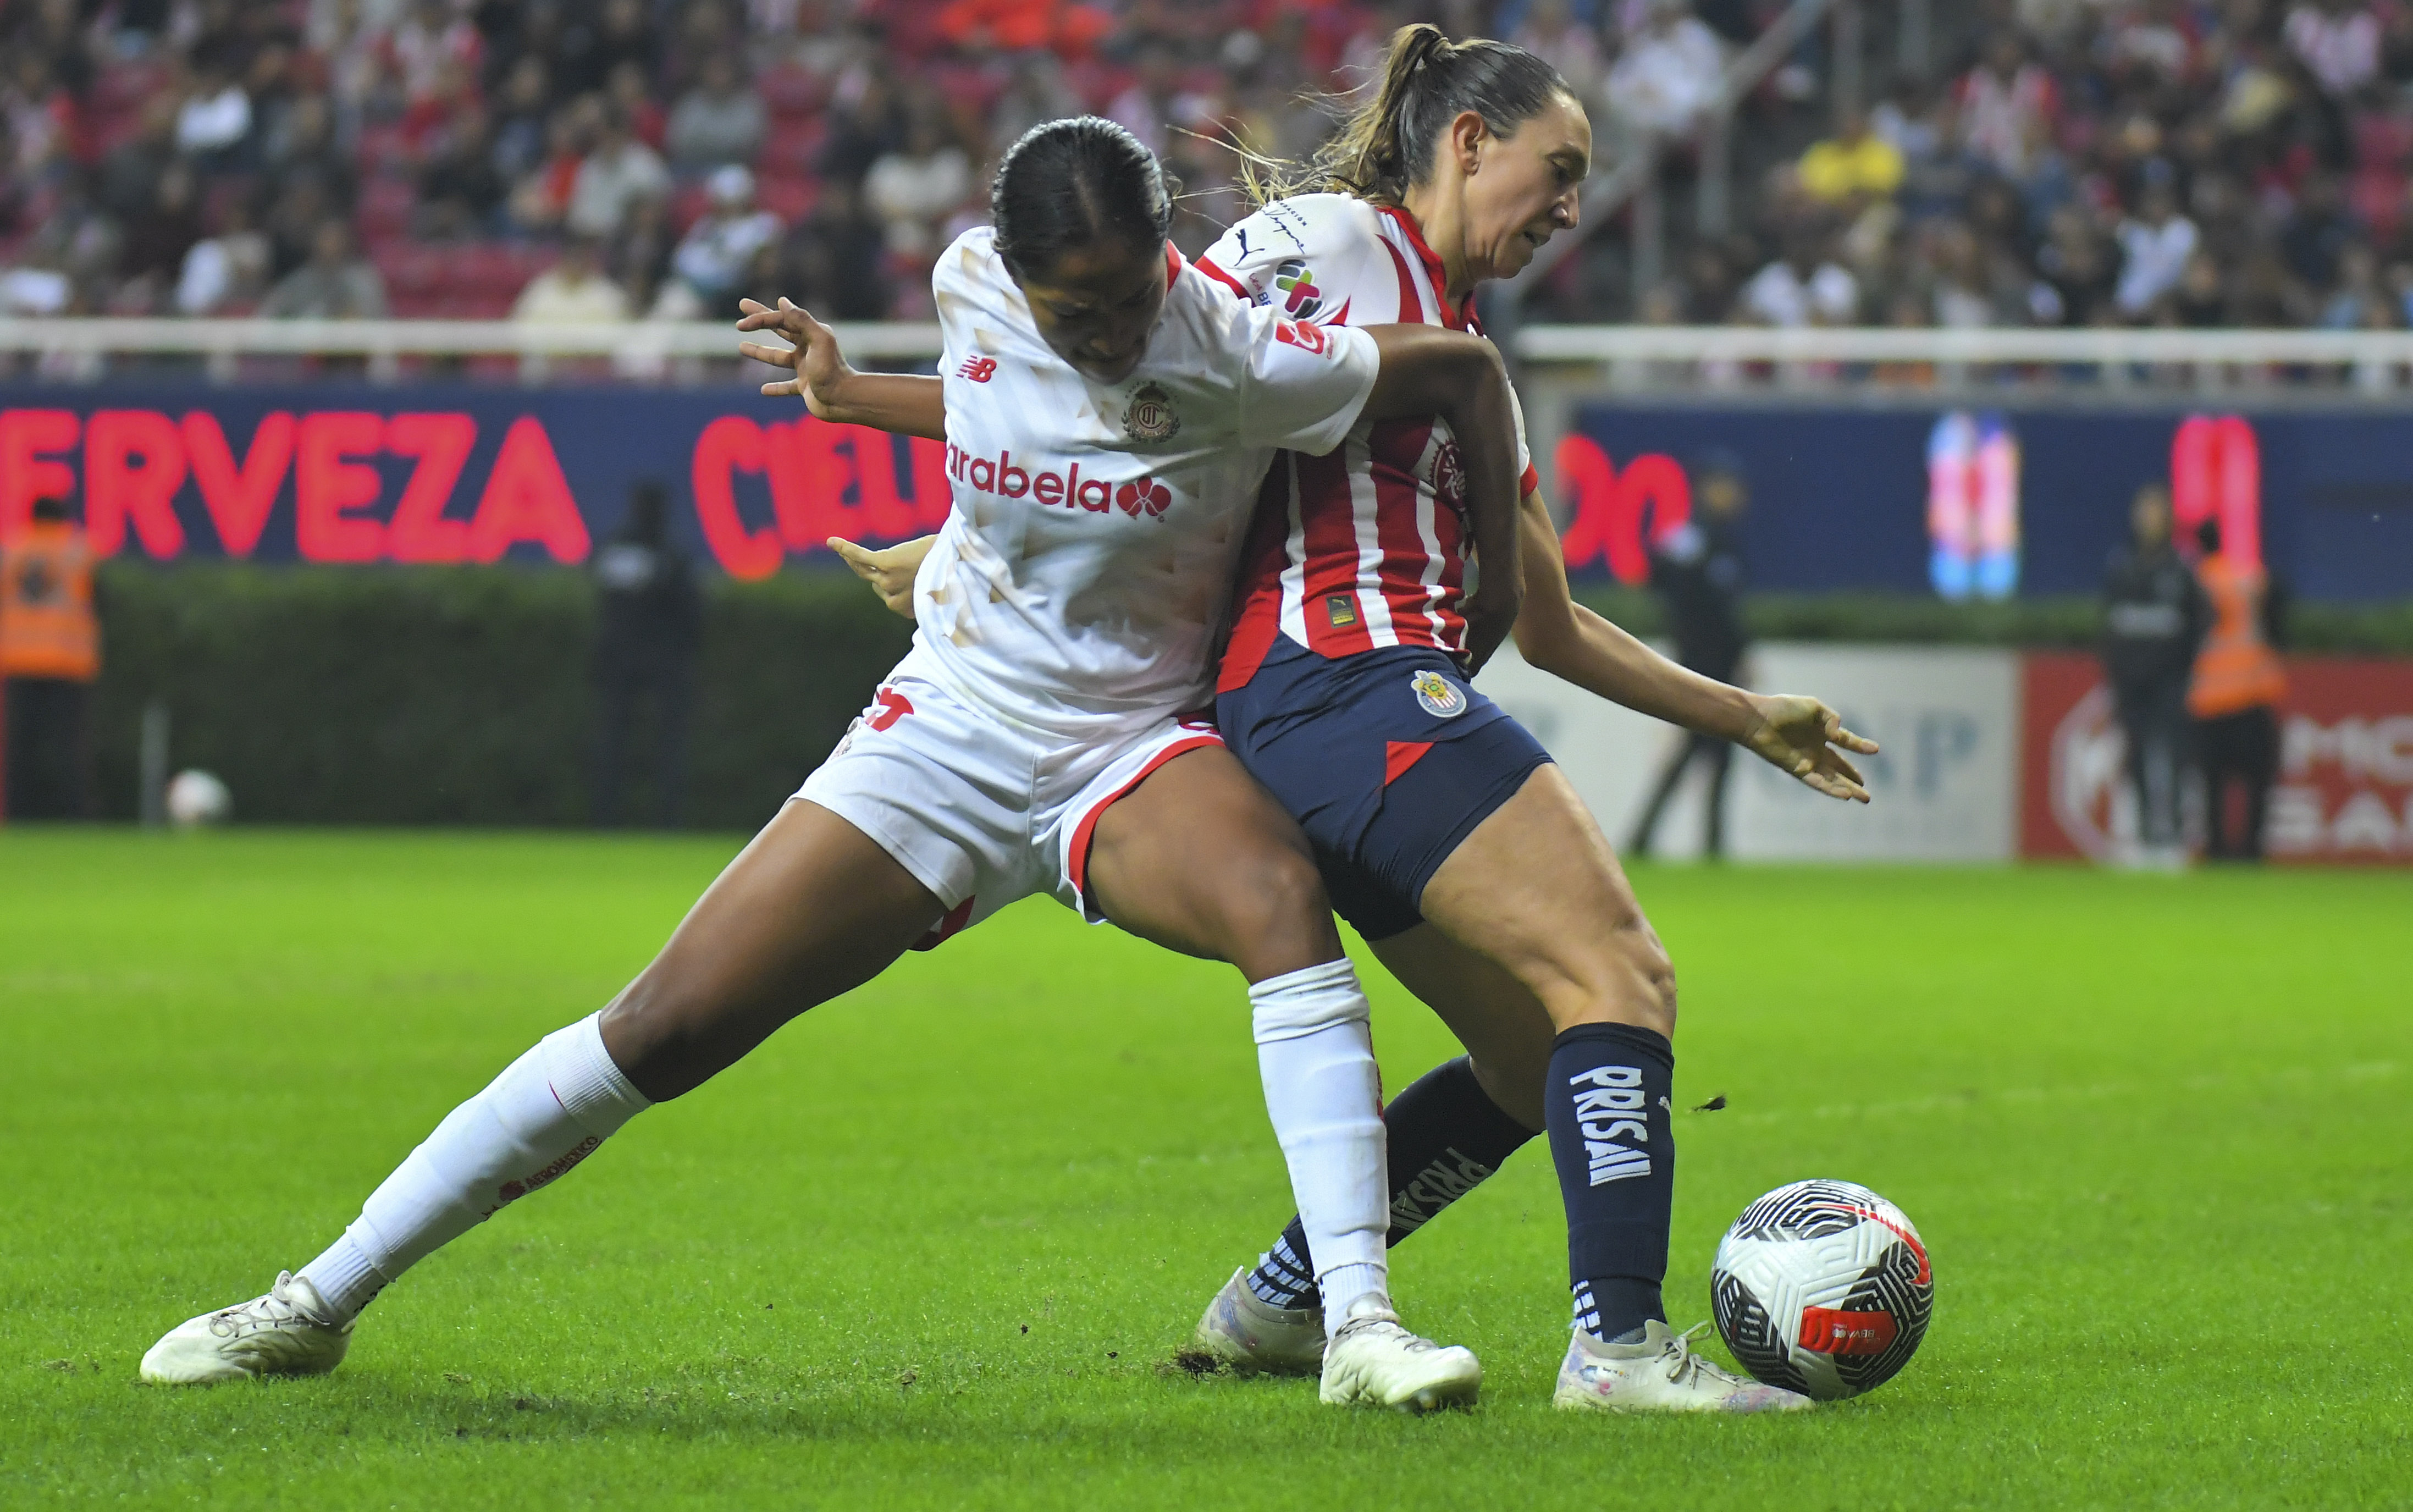 Toluca Femenil luchó en la visita a Chivas, pero cayó 2-1 (global 5-1) en la Vuelta de Cuartos de Final del Apertura 2023 de la Liga MX Femenil